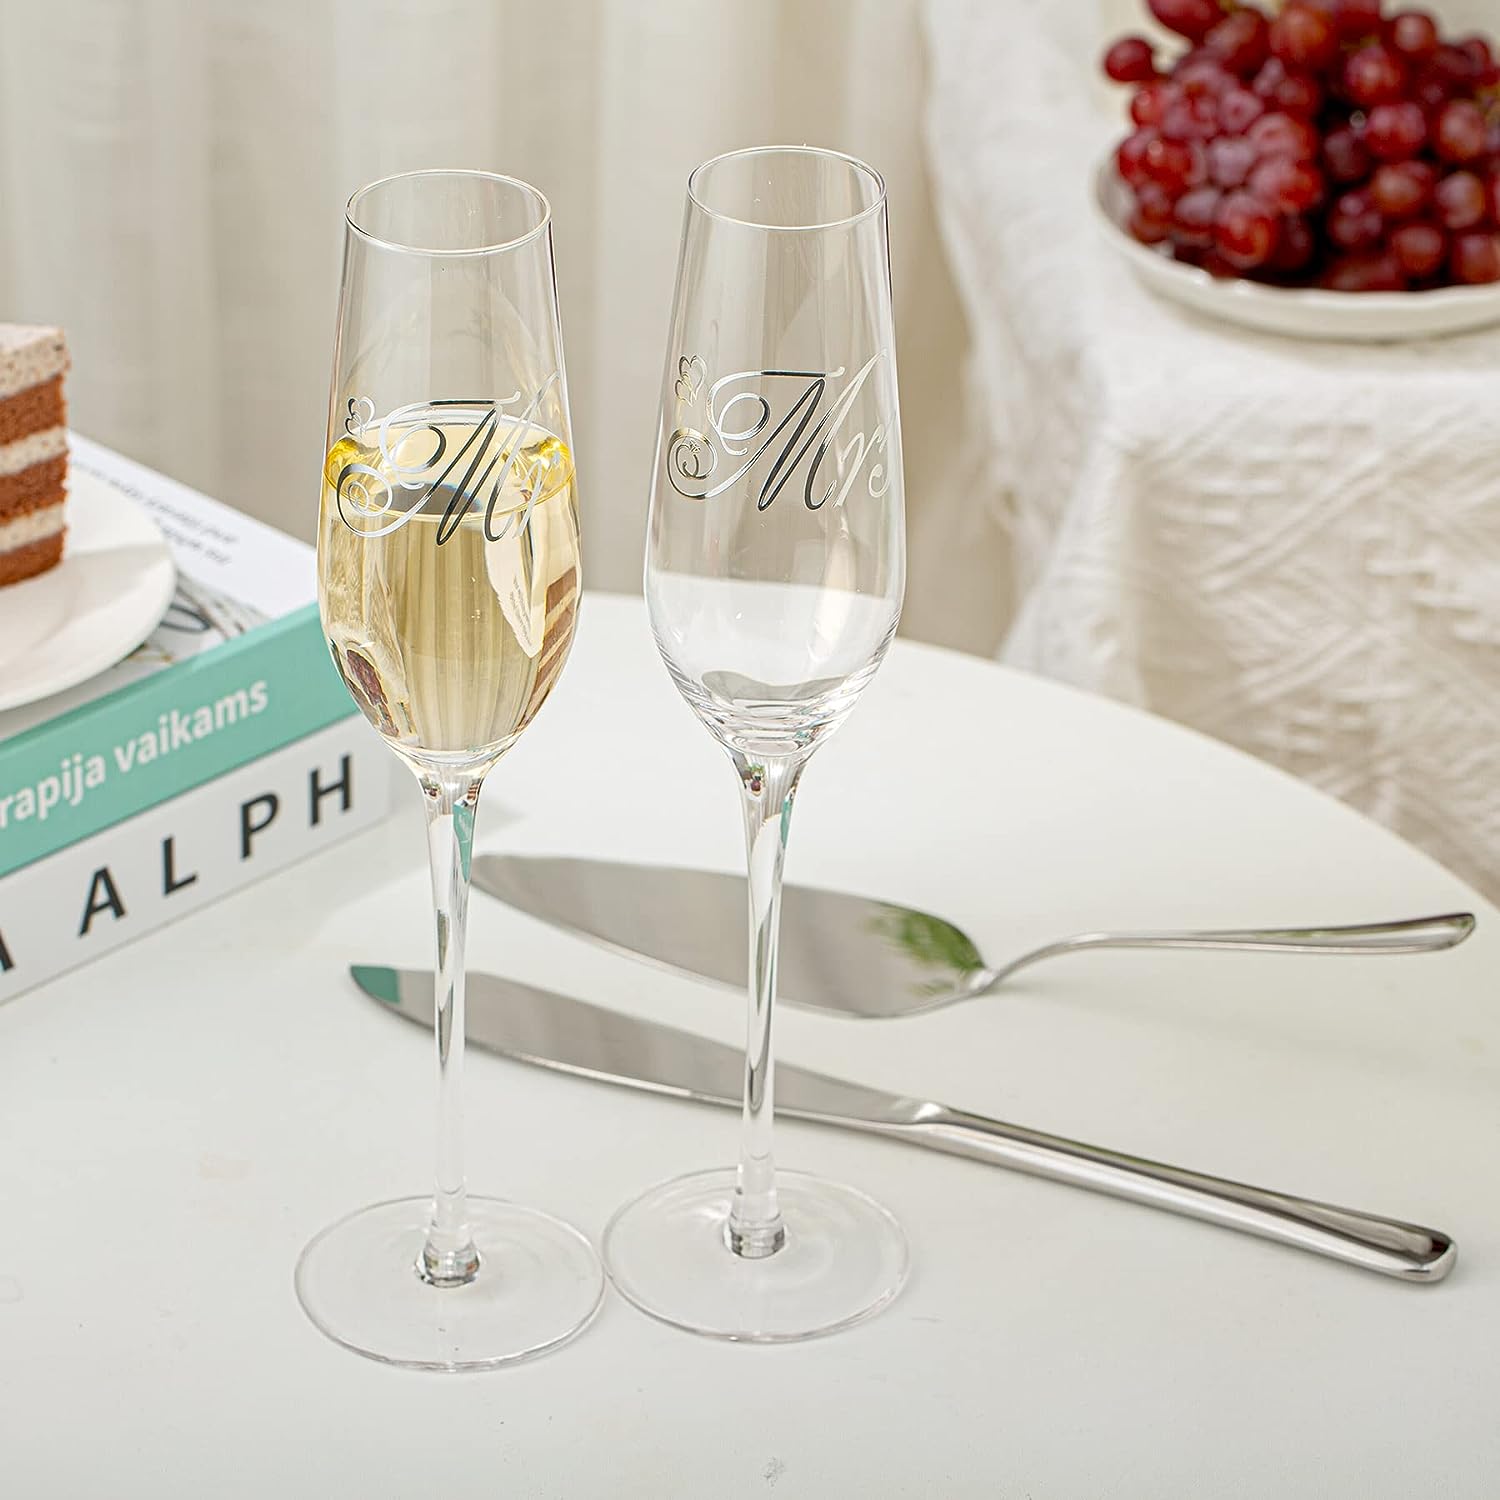 VARLKA Champagne Flutes, Wedding Champagne Glasses for Bride and Groom  Wedding Flutes Set of 2 with …See more VARLKA Champagne Flutes, Wedding